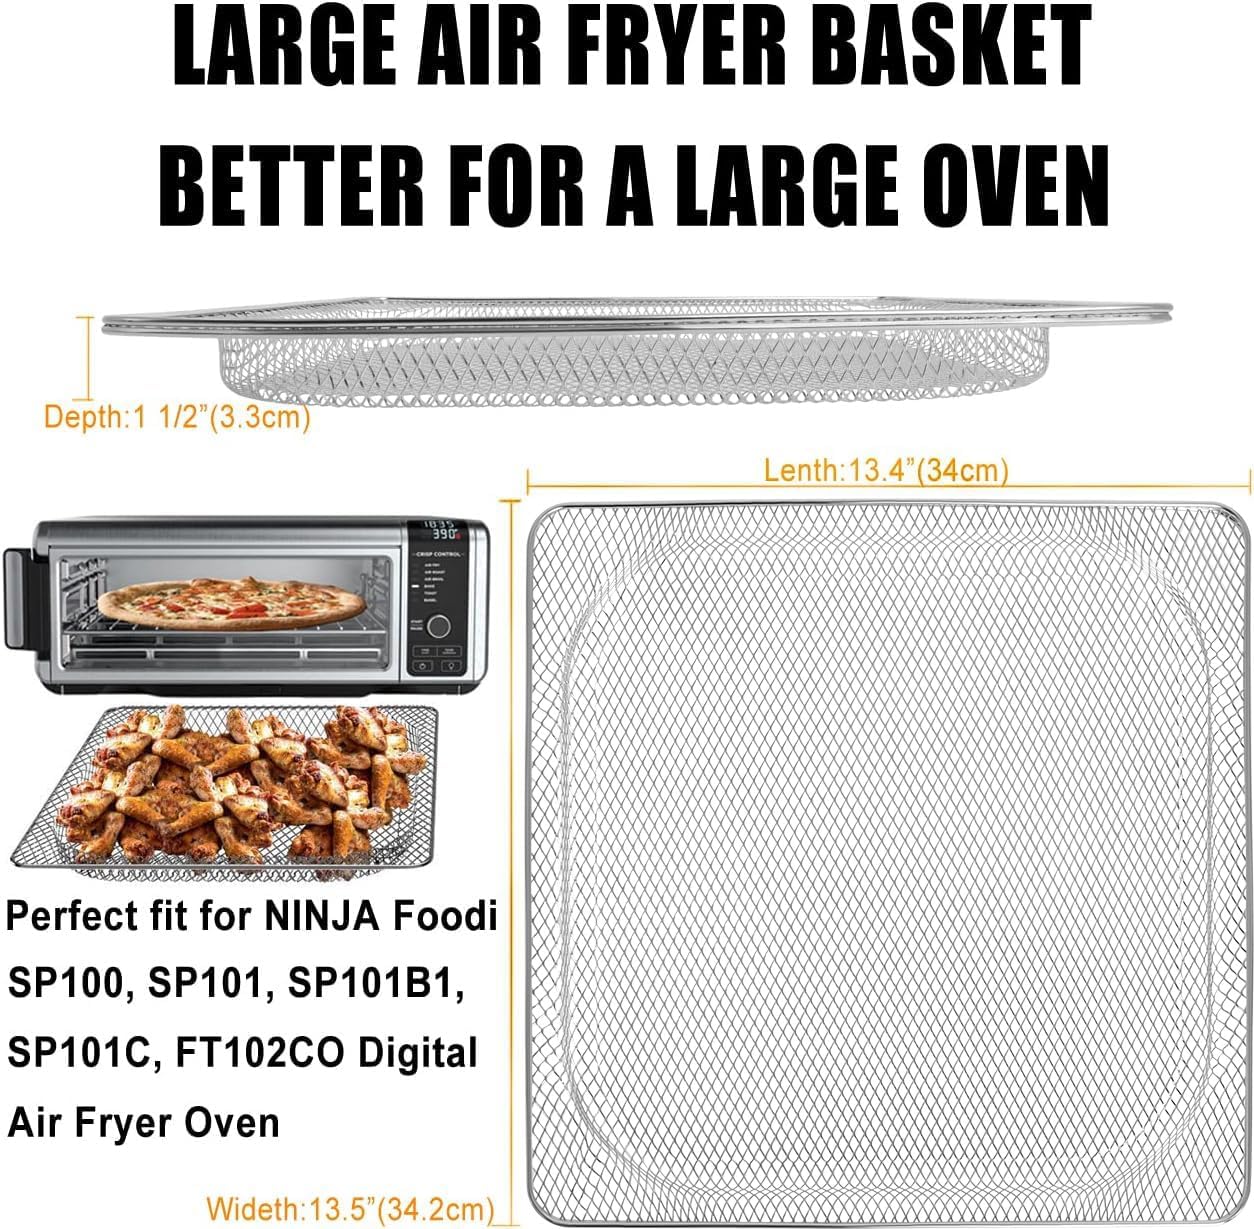 Replacement Air Fry Basket for Ninja Foodi SP201 Air Fryer Oven